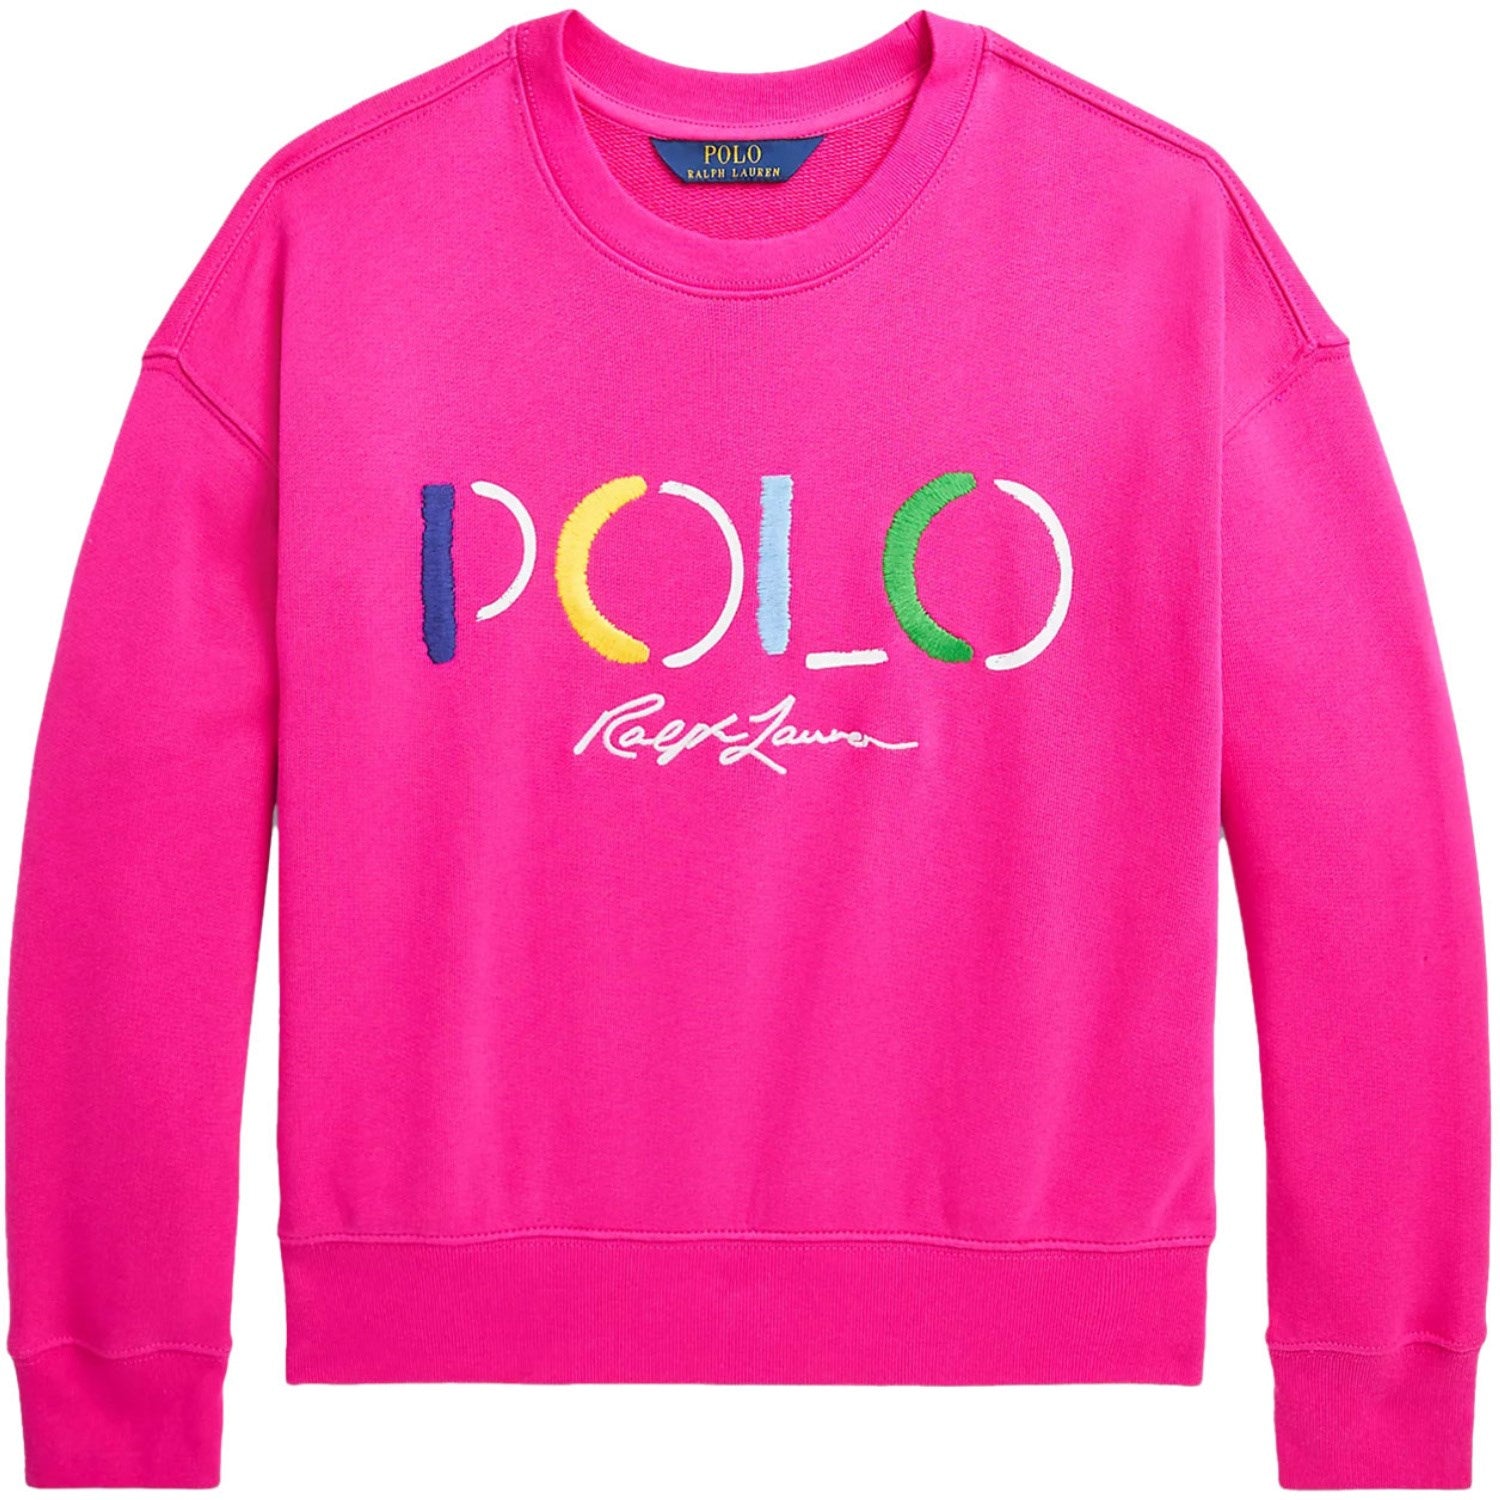 Polo Ralph Lauren Girls Sweatshirt Bright Pink